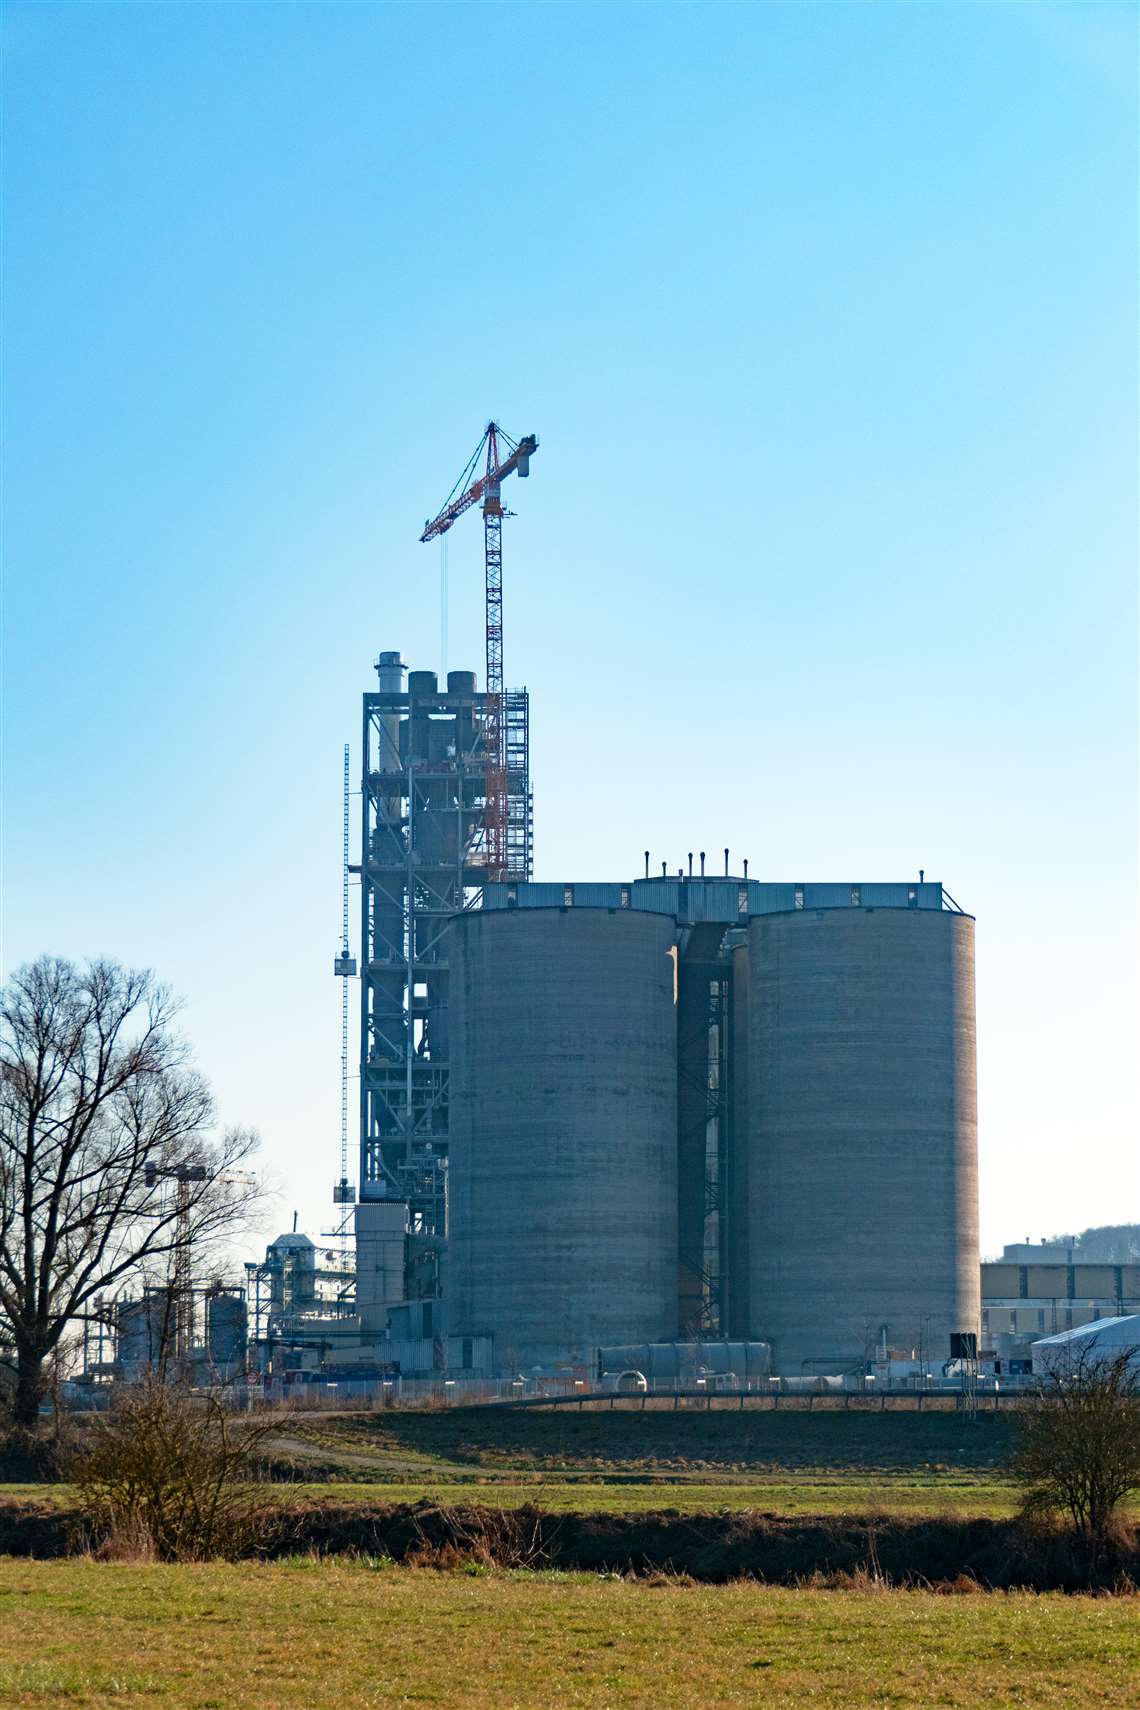 Märker Zement's new cement kiln under construction in Germany